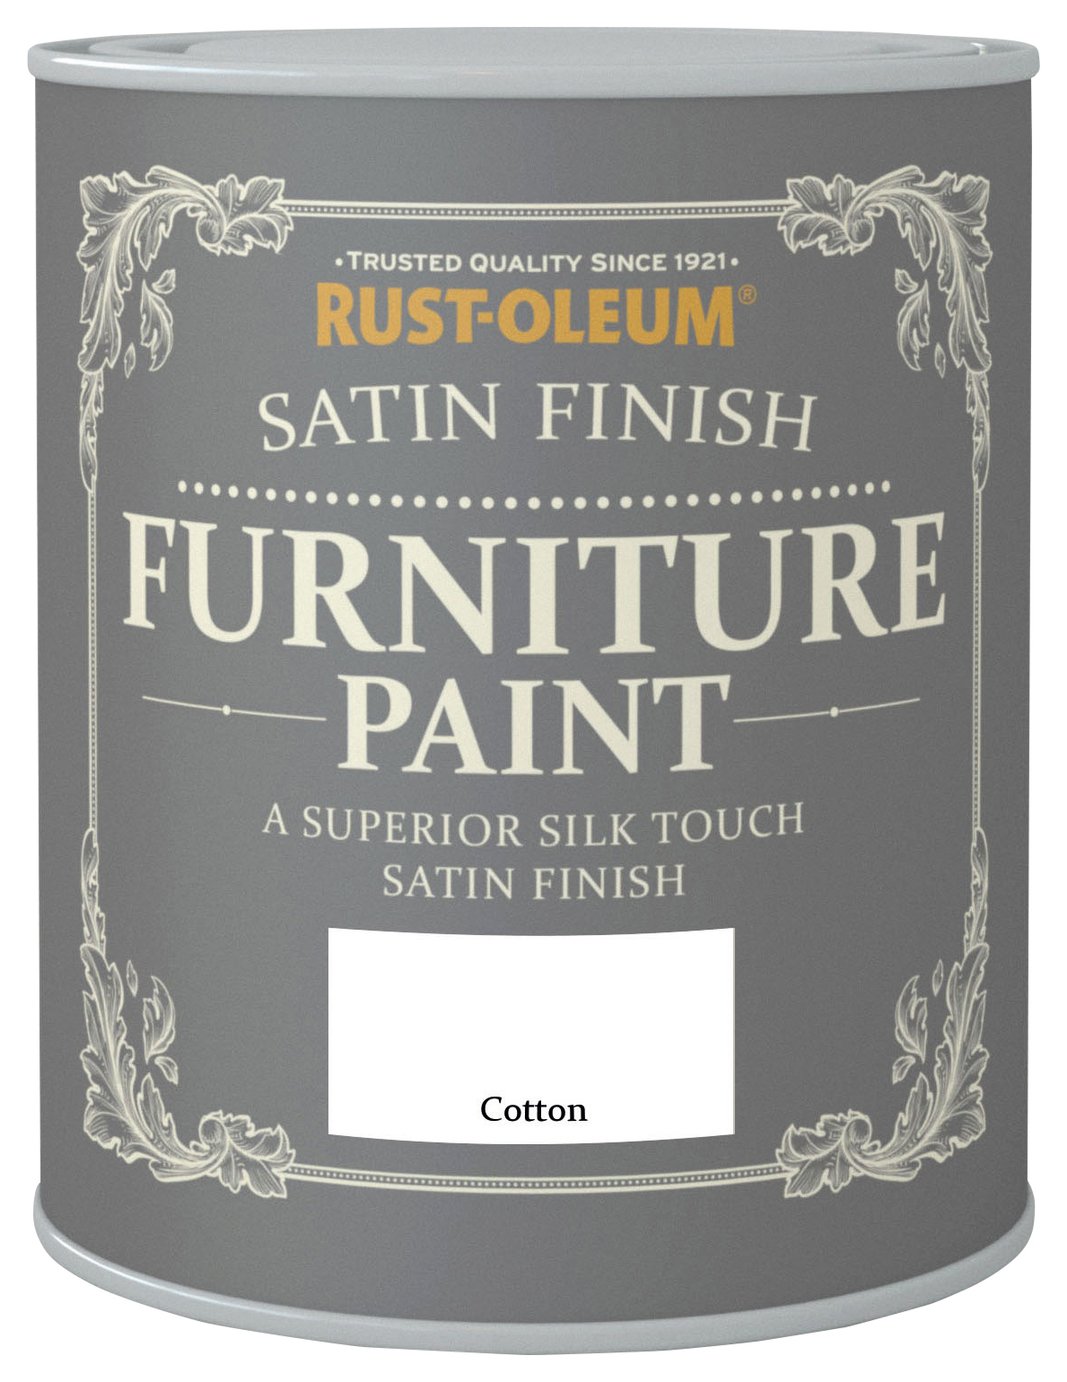 Rust-Oleum Satin Furniture Paint 750ml - Cotton